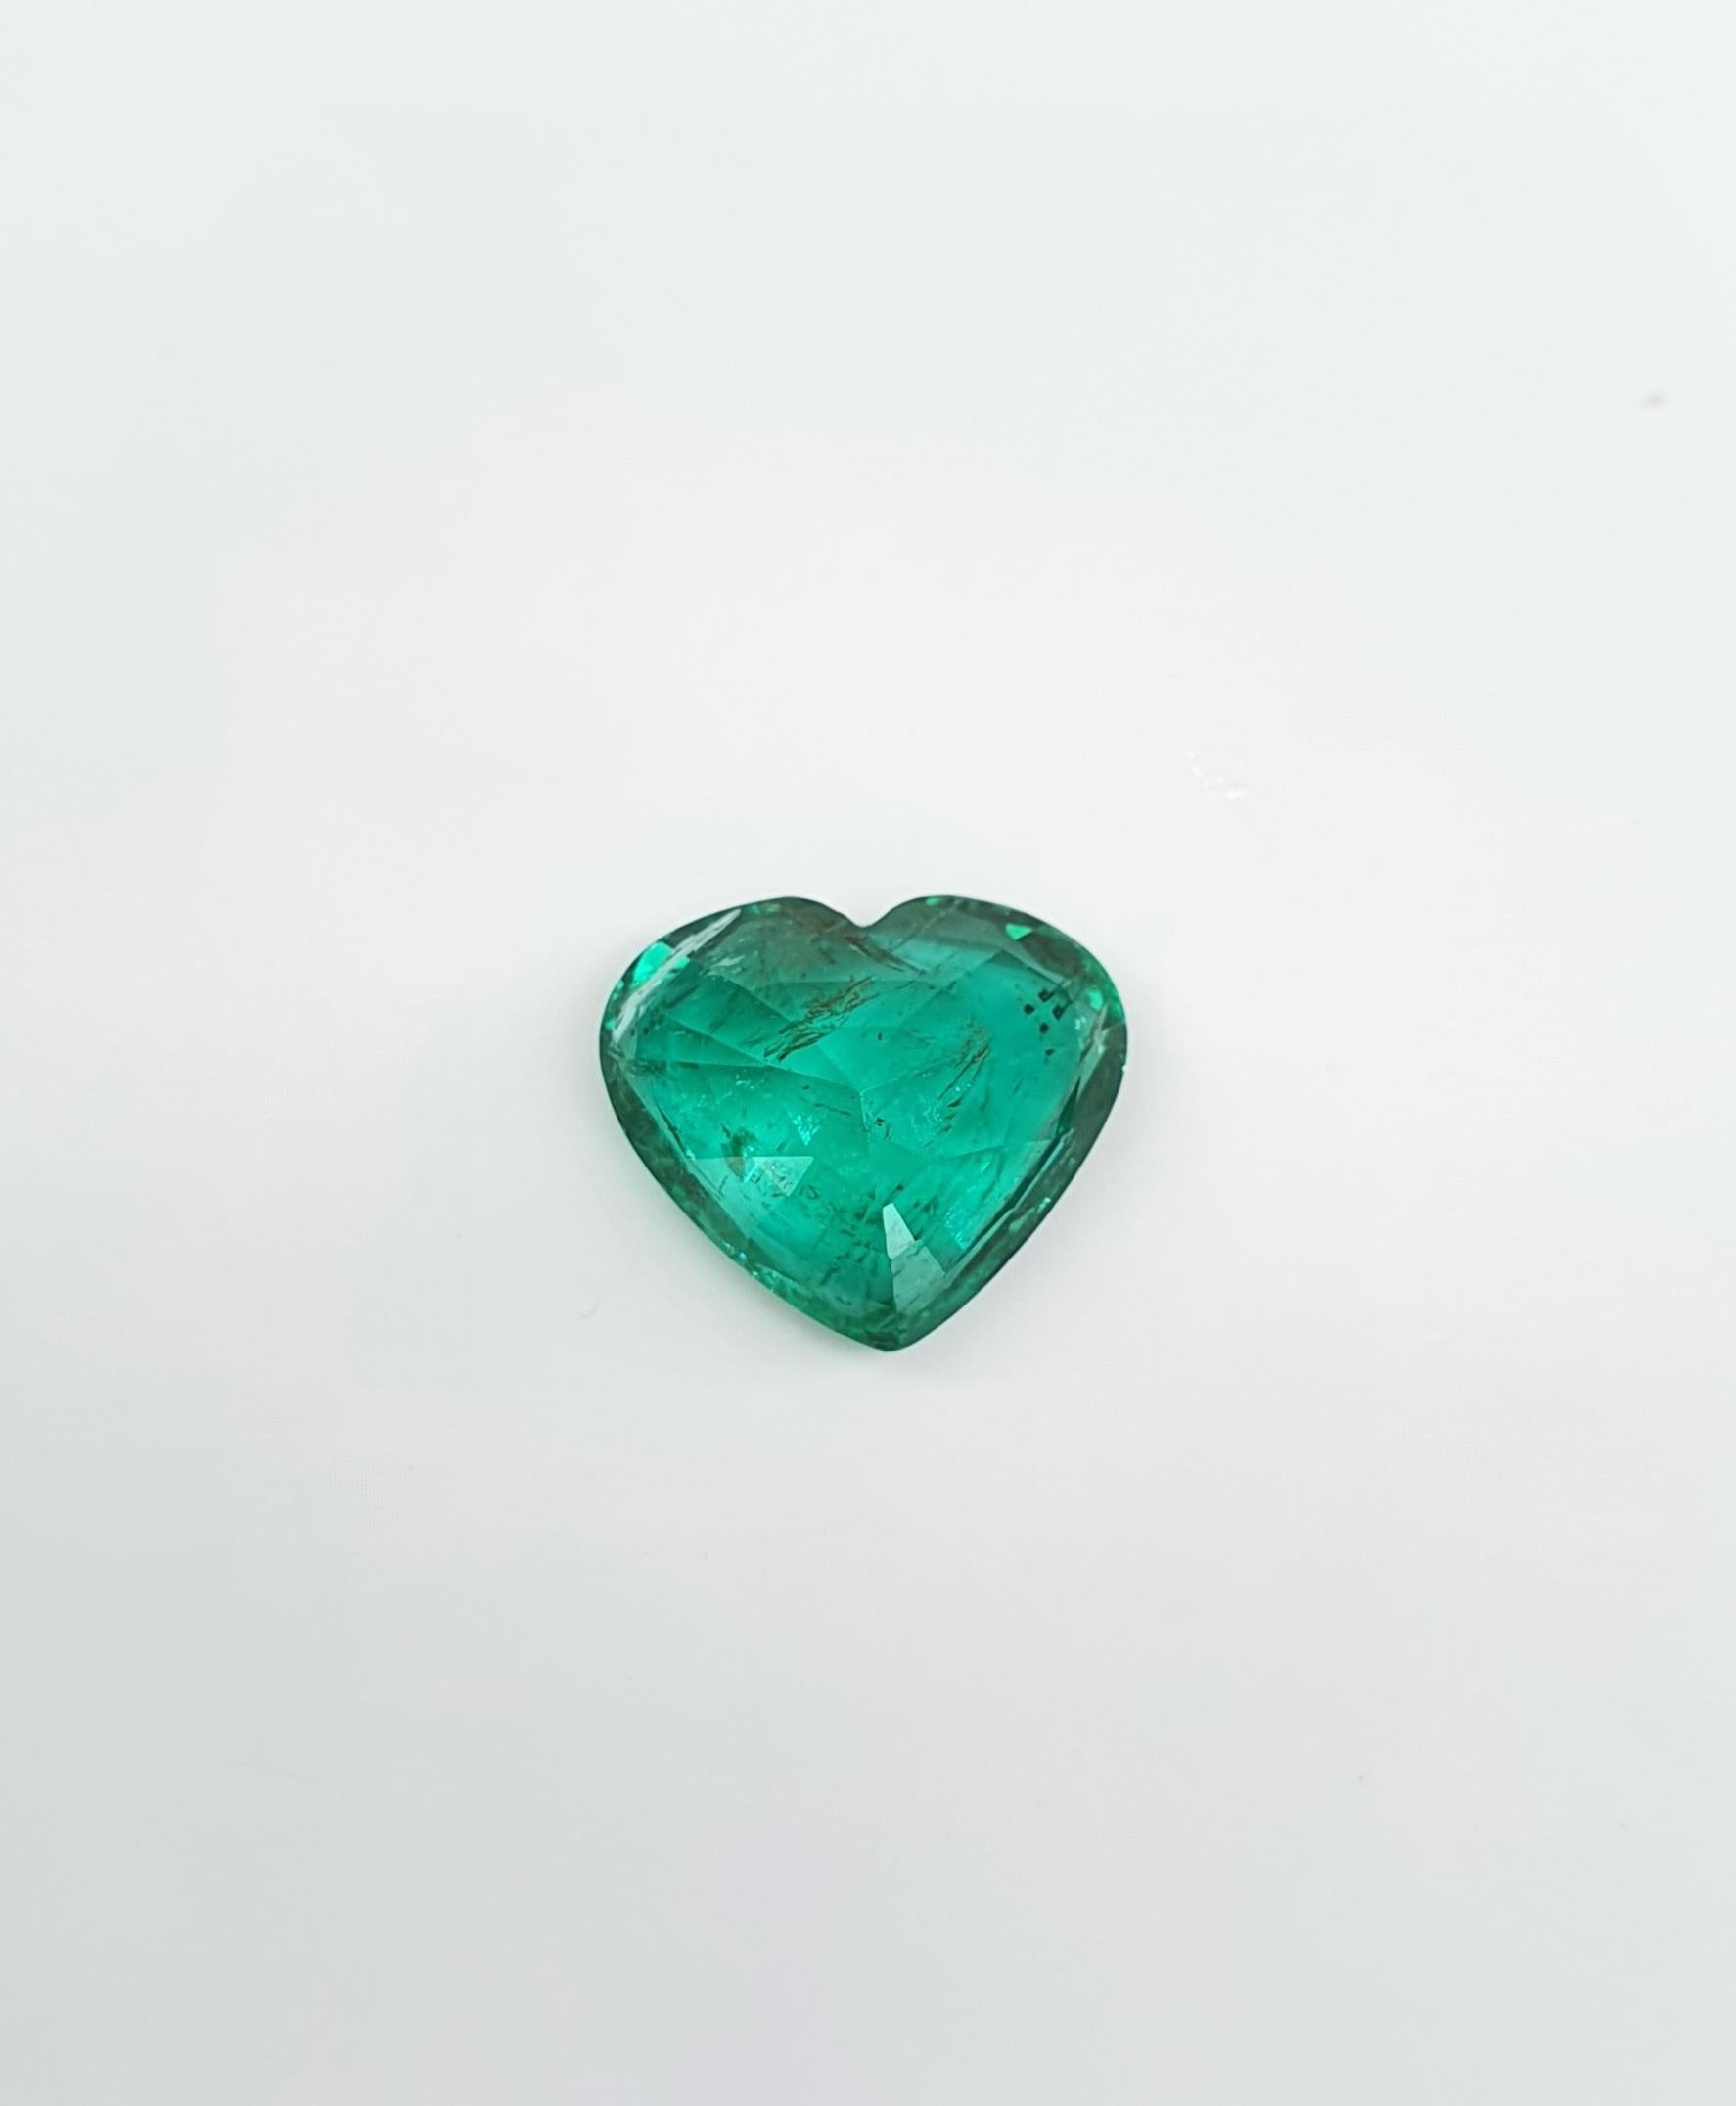 Heart Cut 4.76 Carat Emerald, Heart Shape, Zambia For Sale